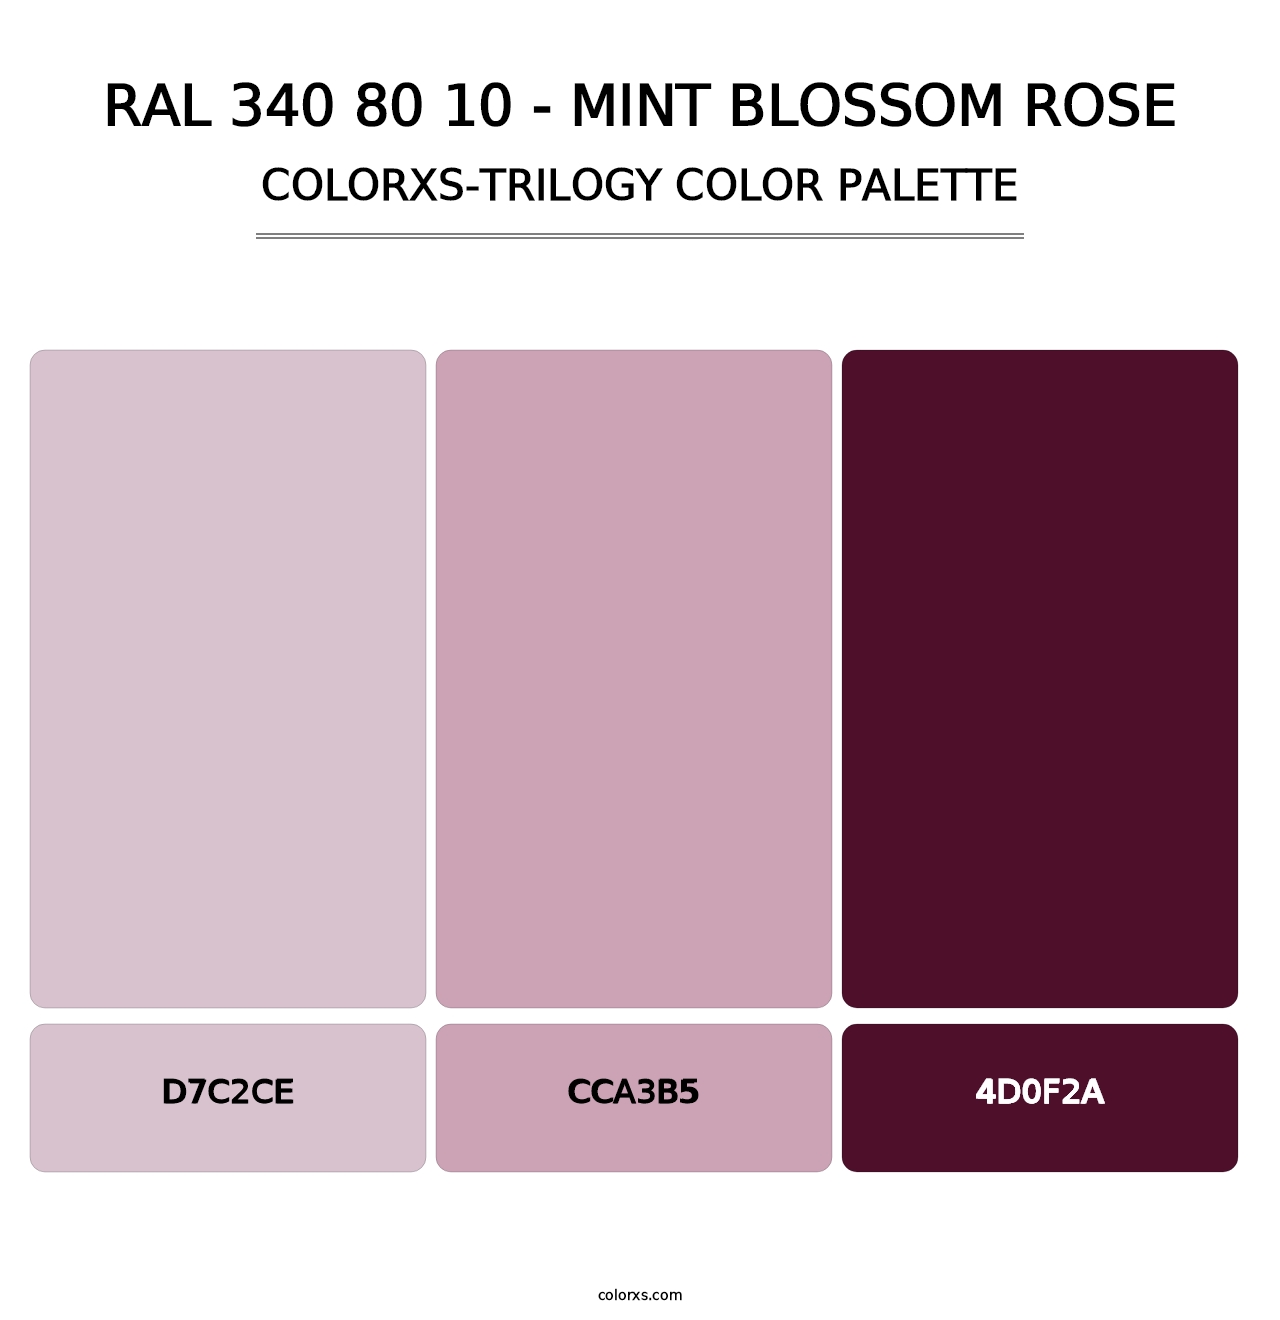 RAL 340 80 10 - Mint Blossom Rose - Colorxs Trilogy Palette